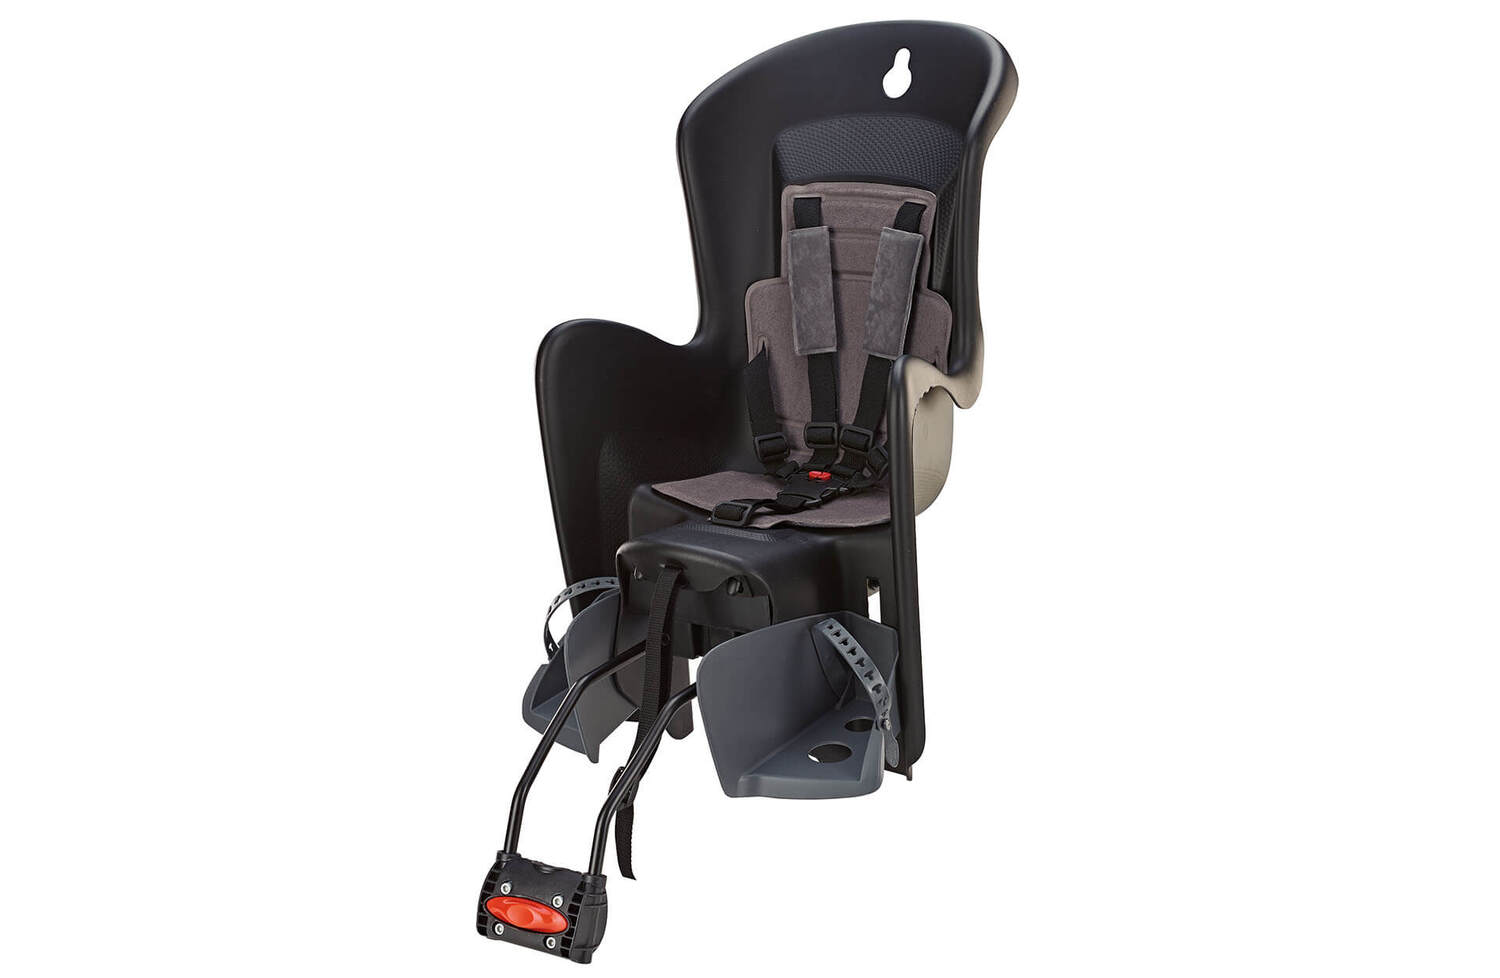 Kindersitze - Sicherheits-Kindersitz Bilby RS von PROPHETE | Fahrradkindersitze